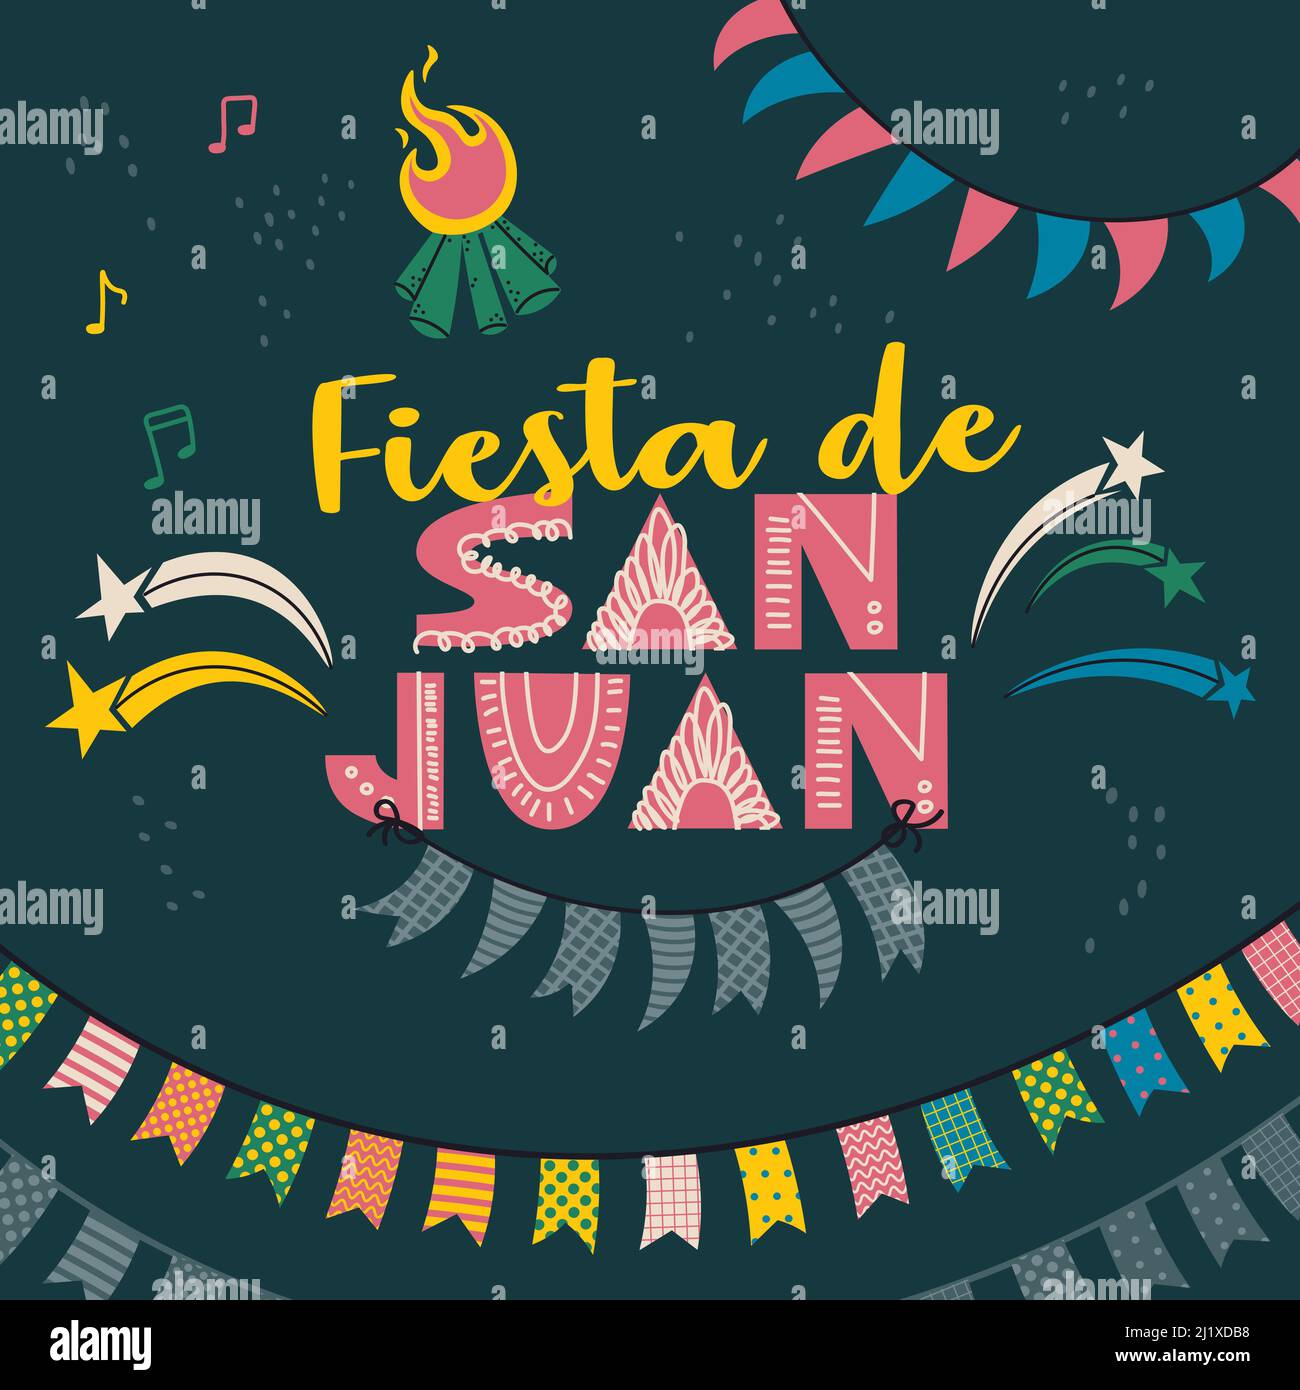 Postcard or poster design for Saint Juan celebration. Text in Spanish Fiesta de San Juan - Saint John festivity . Bonfire, fireworks and decorative Stock Vector